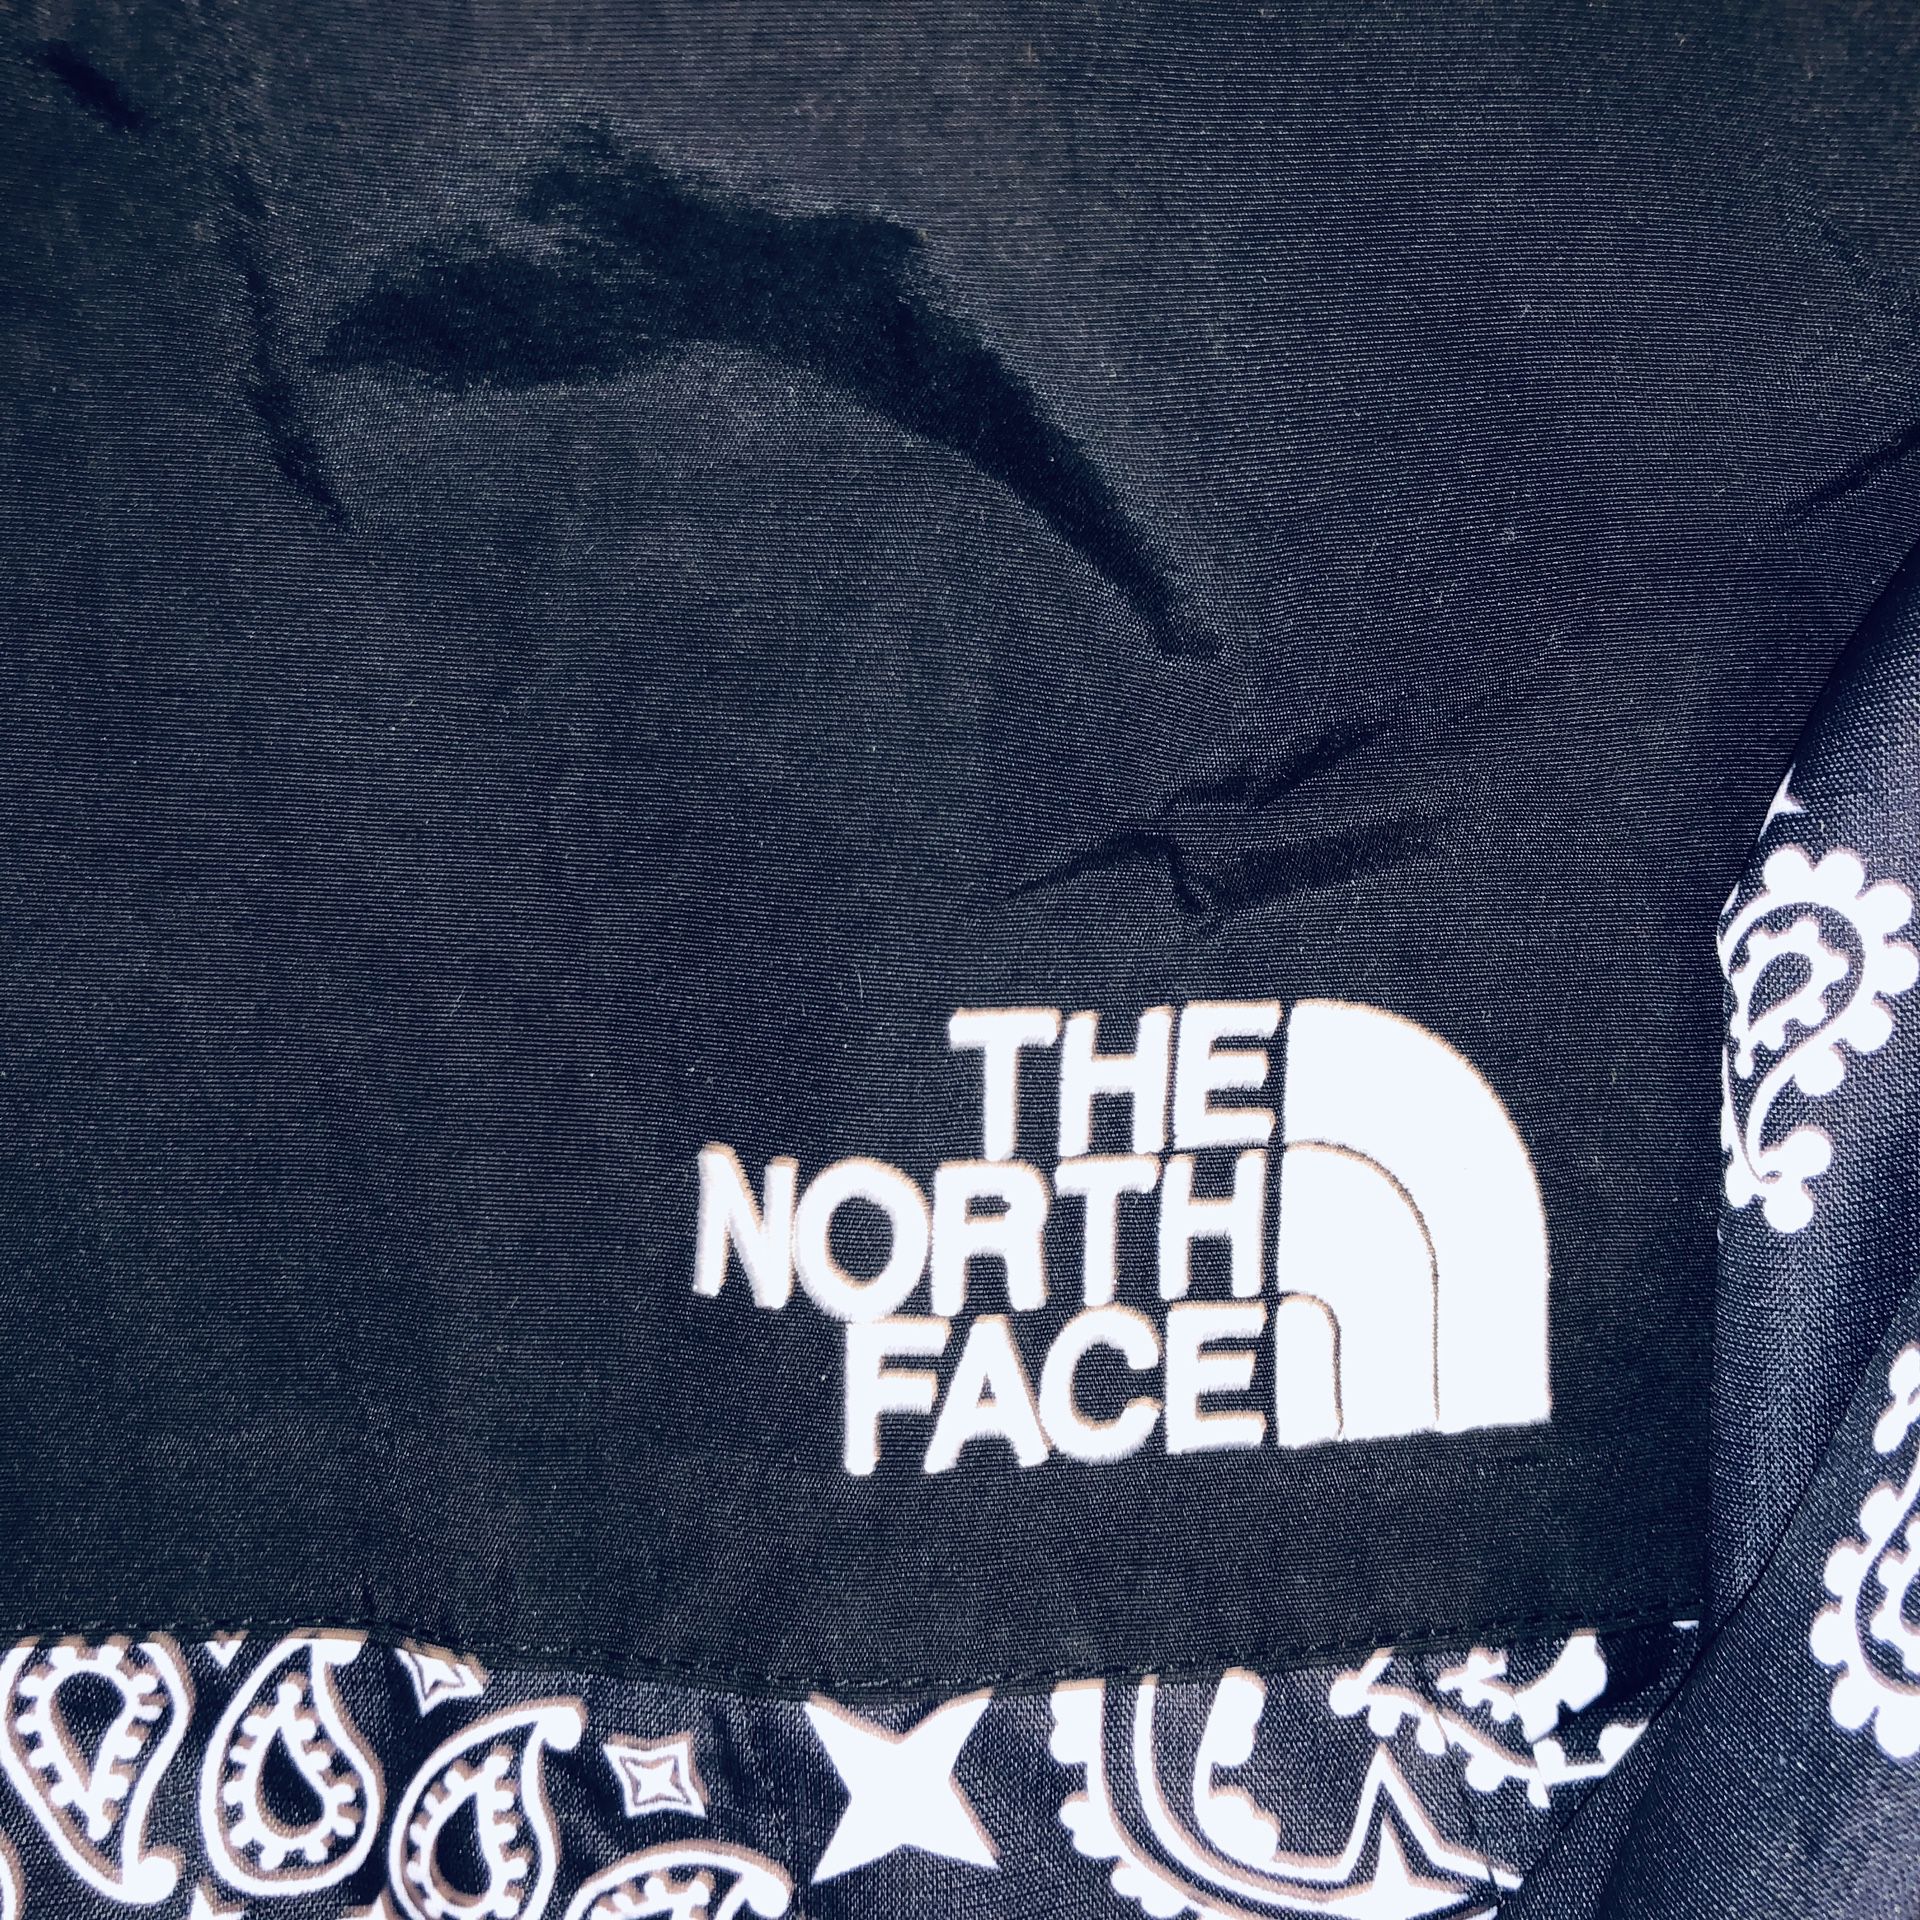 Supreme the northface bandana jacket for Sale in Diamond Bar, CA